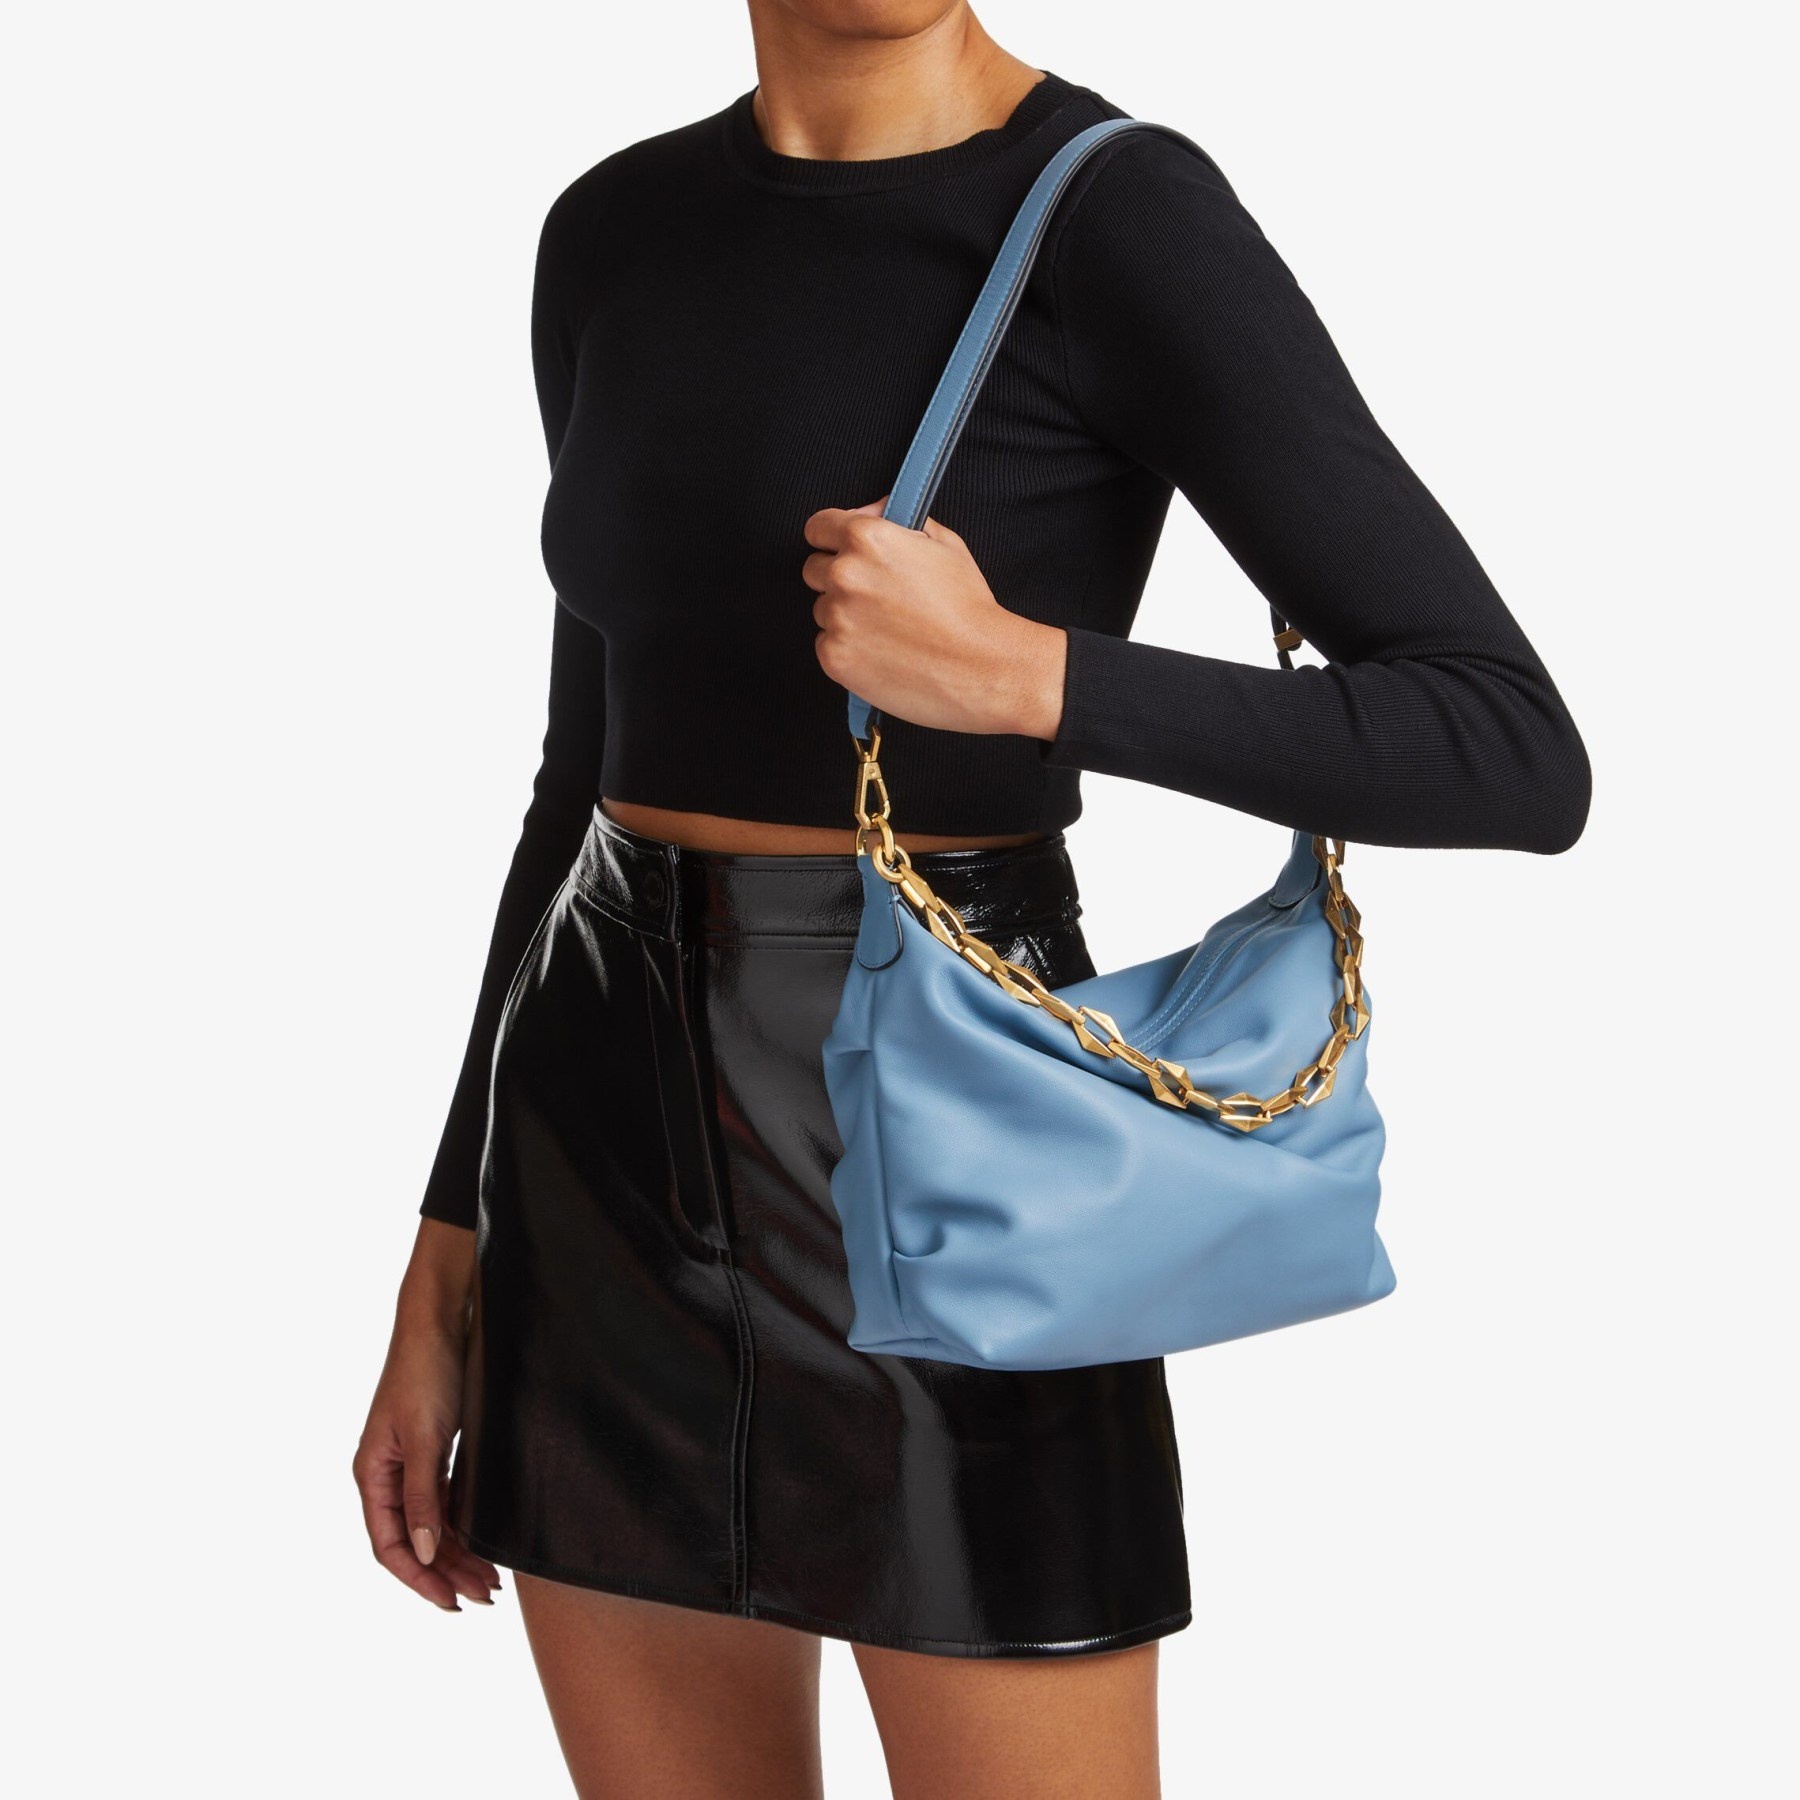 Diamond Soft Hobo S
Smoky Blue Soft Calf Leather Hobo Bag with Chain Strap - 2